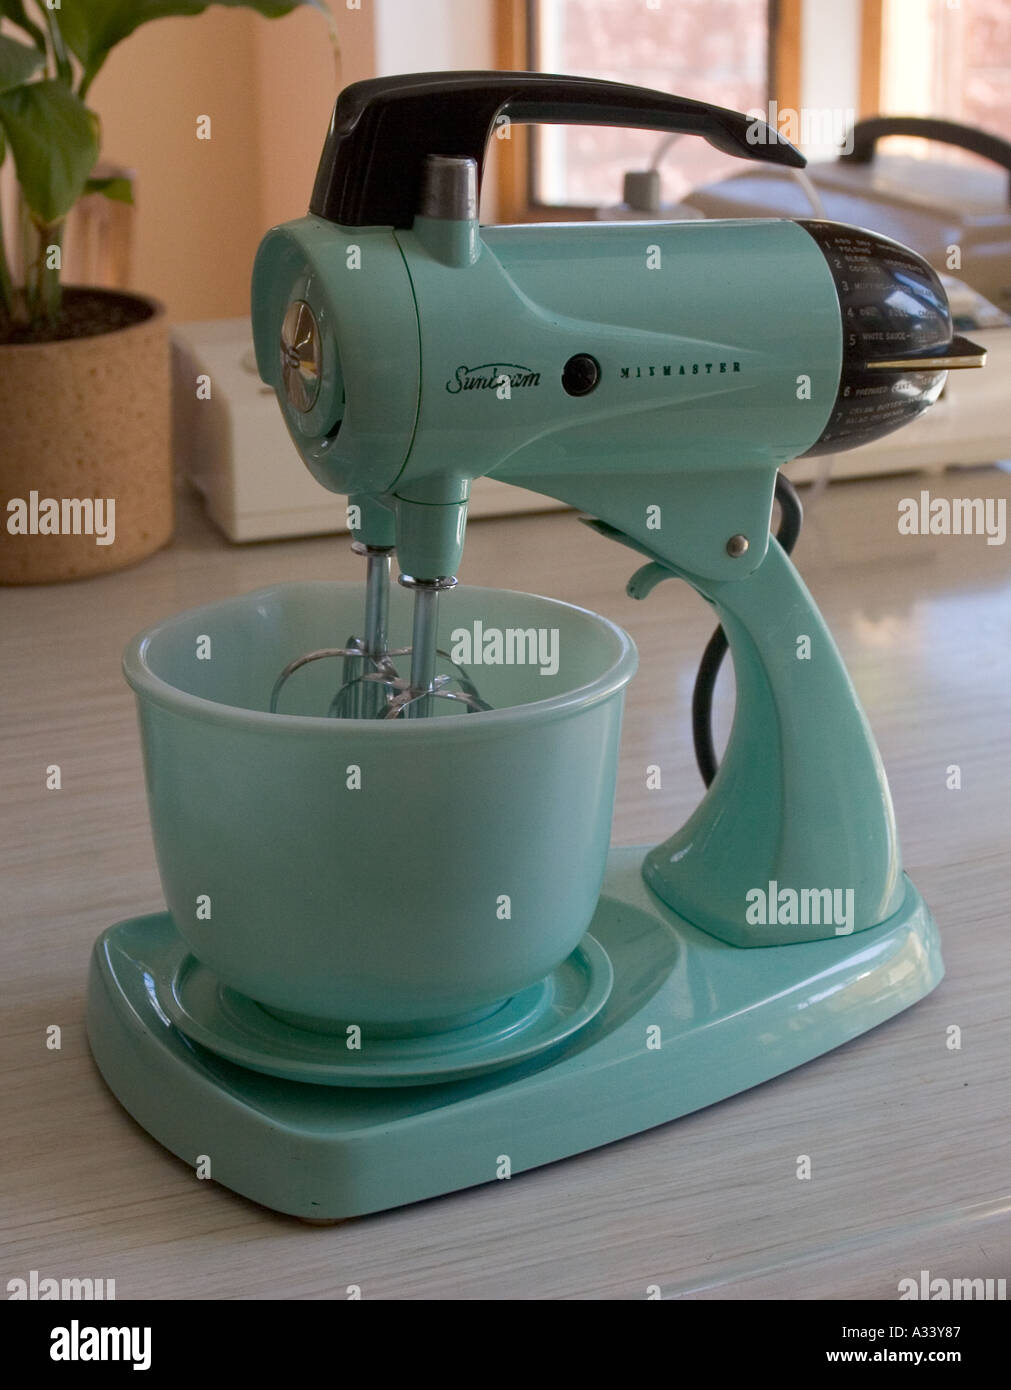 https://c8.alamy.com/comp/A33Y87/vintage-green-sunbeam-mixmaster-in-kitchen-A33Y87.jpg